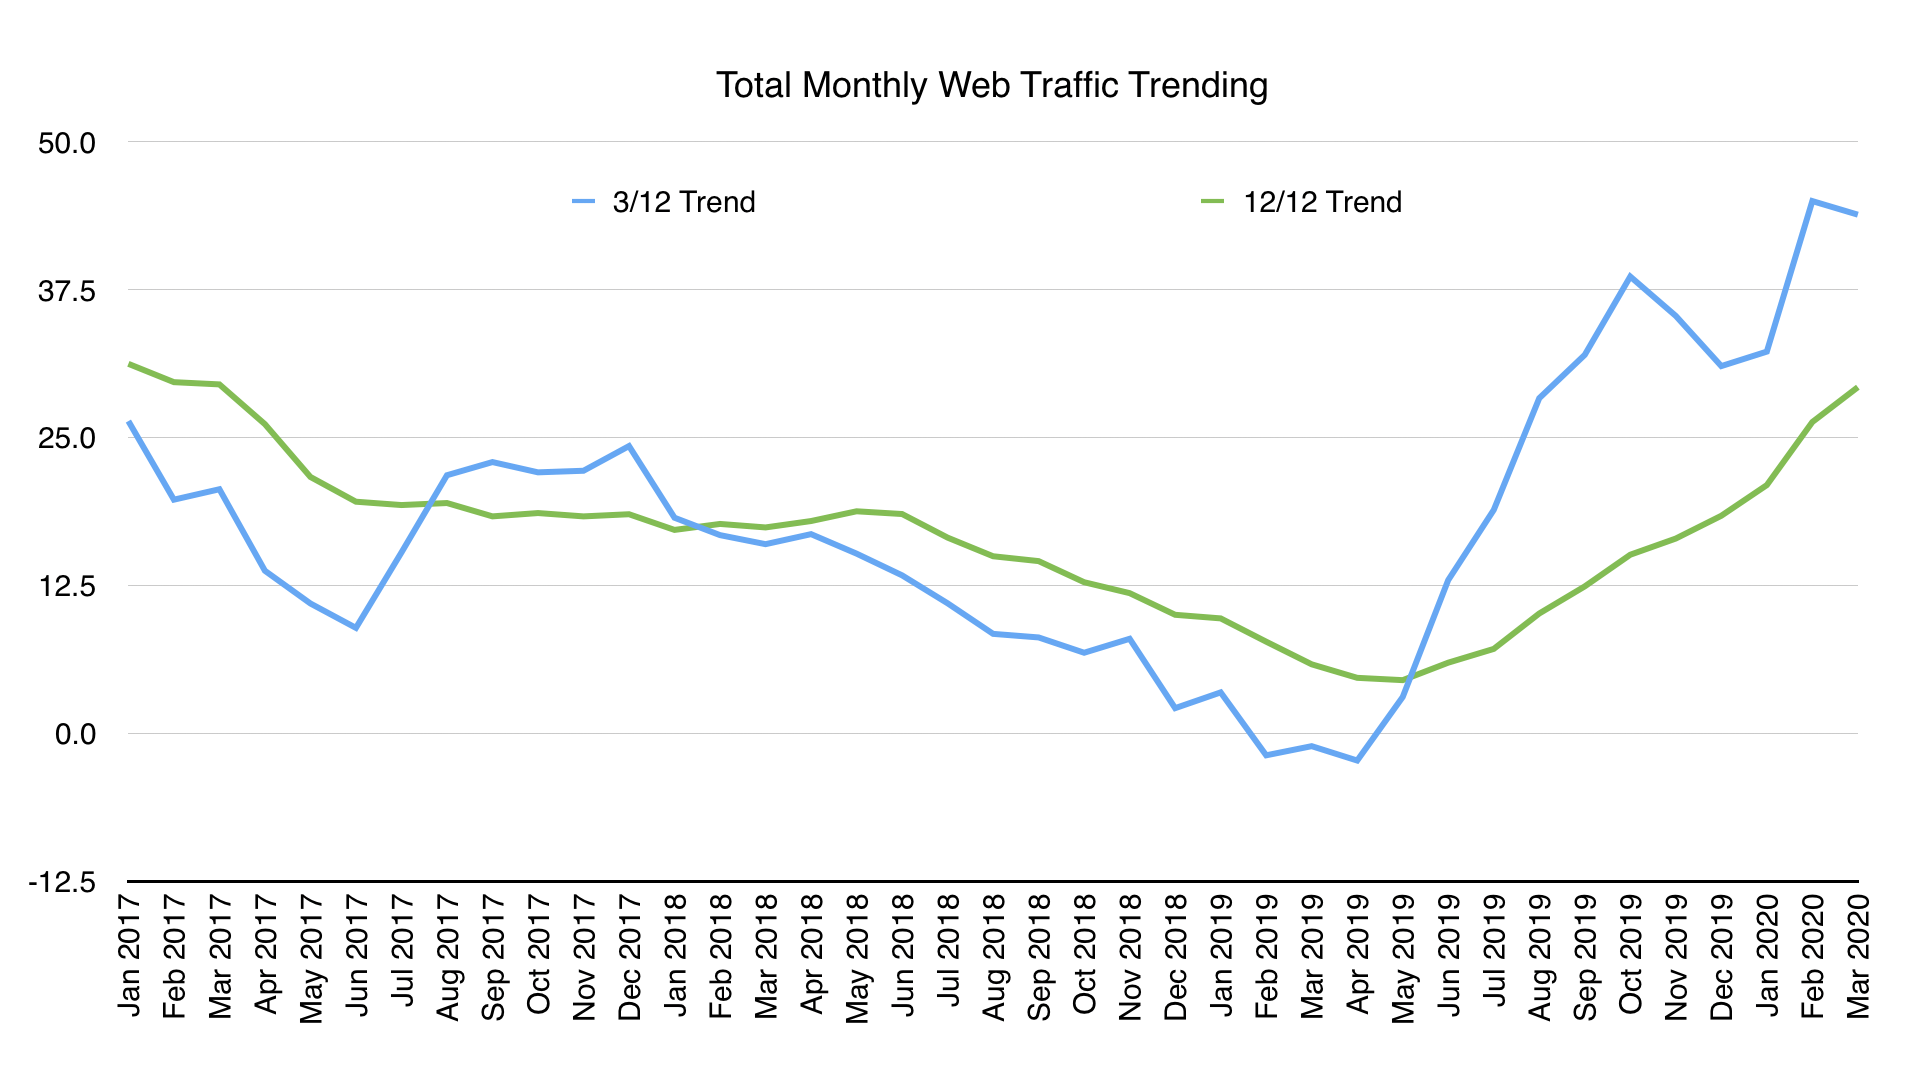 Monthly web traffic trending